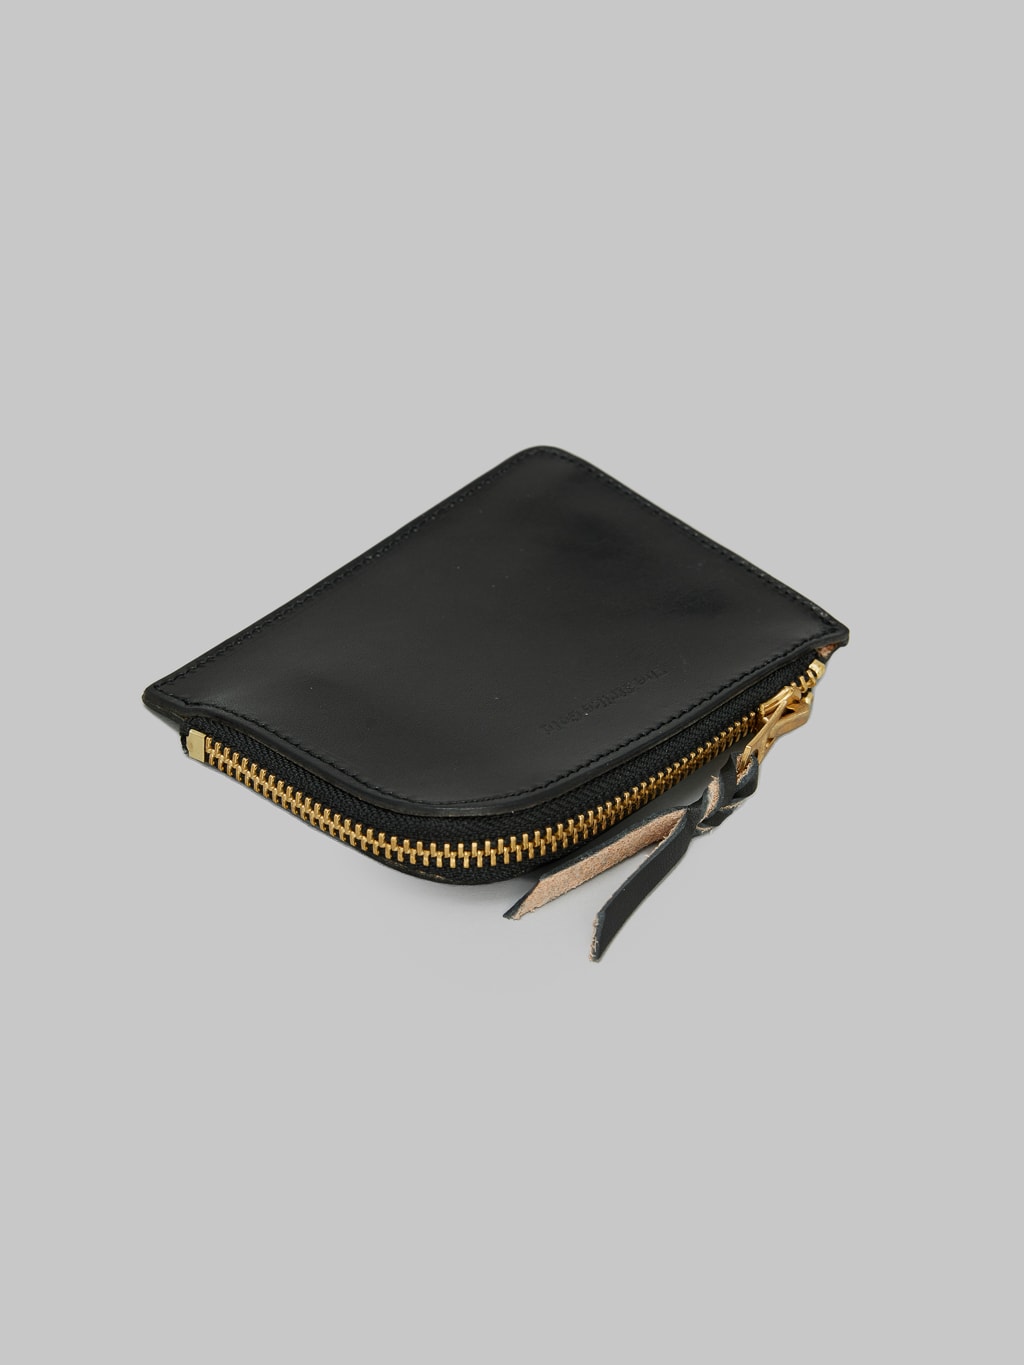 The Strike Gold Italian Leather Zip Wallet Black